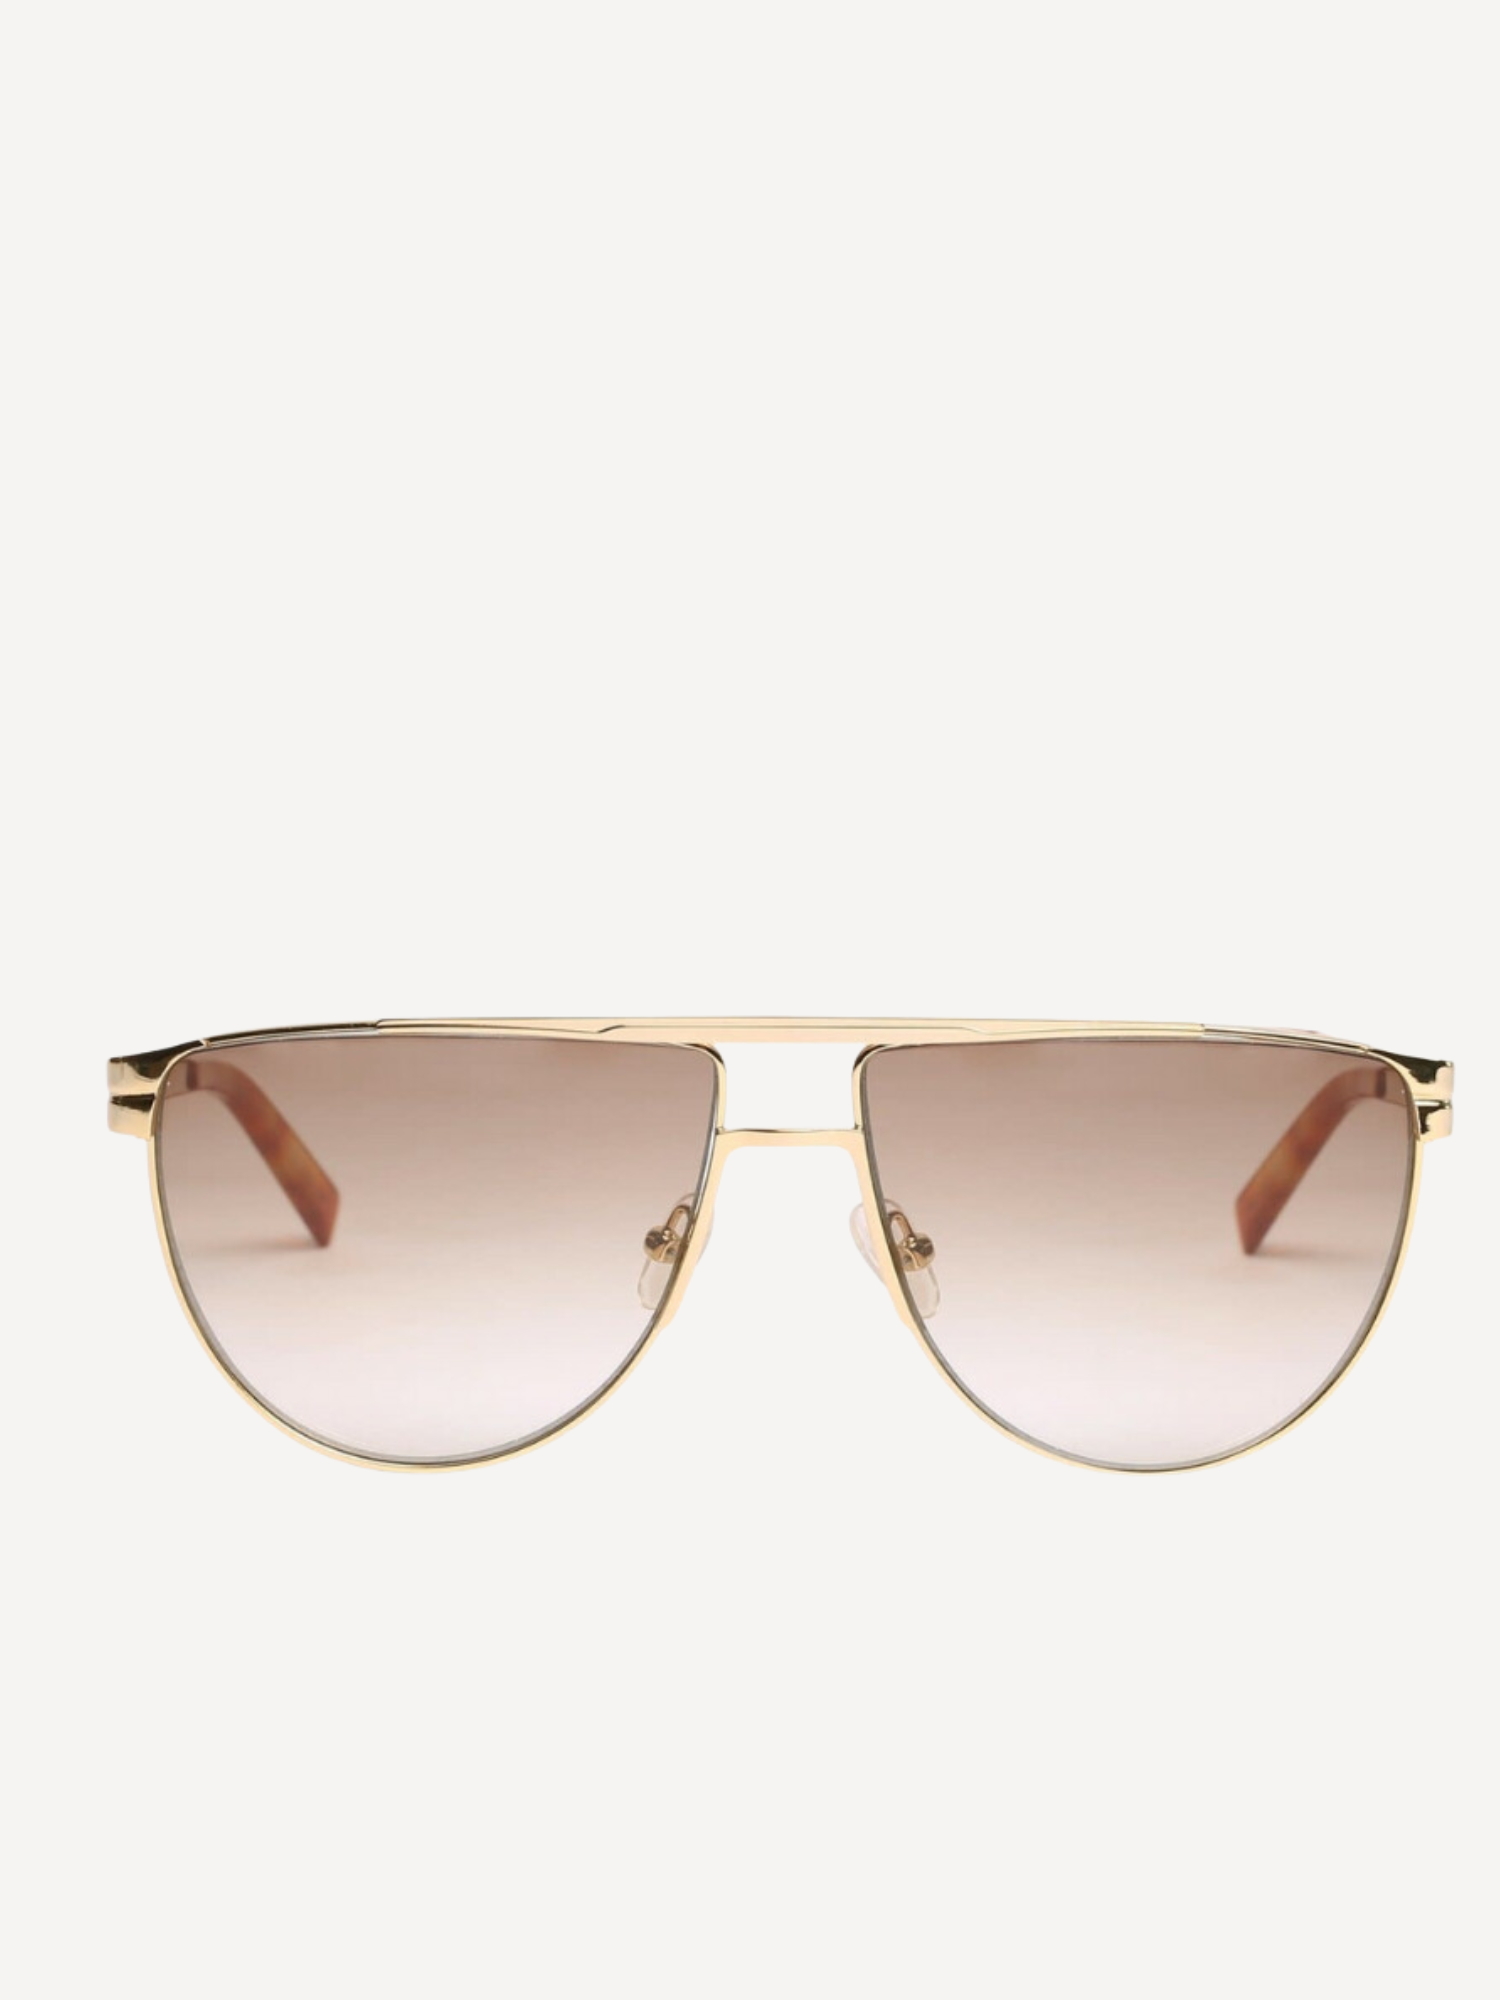 Enzo Capri Sunglasses